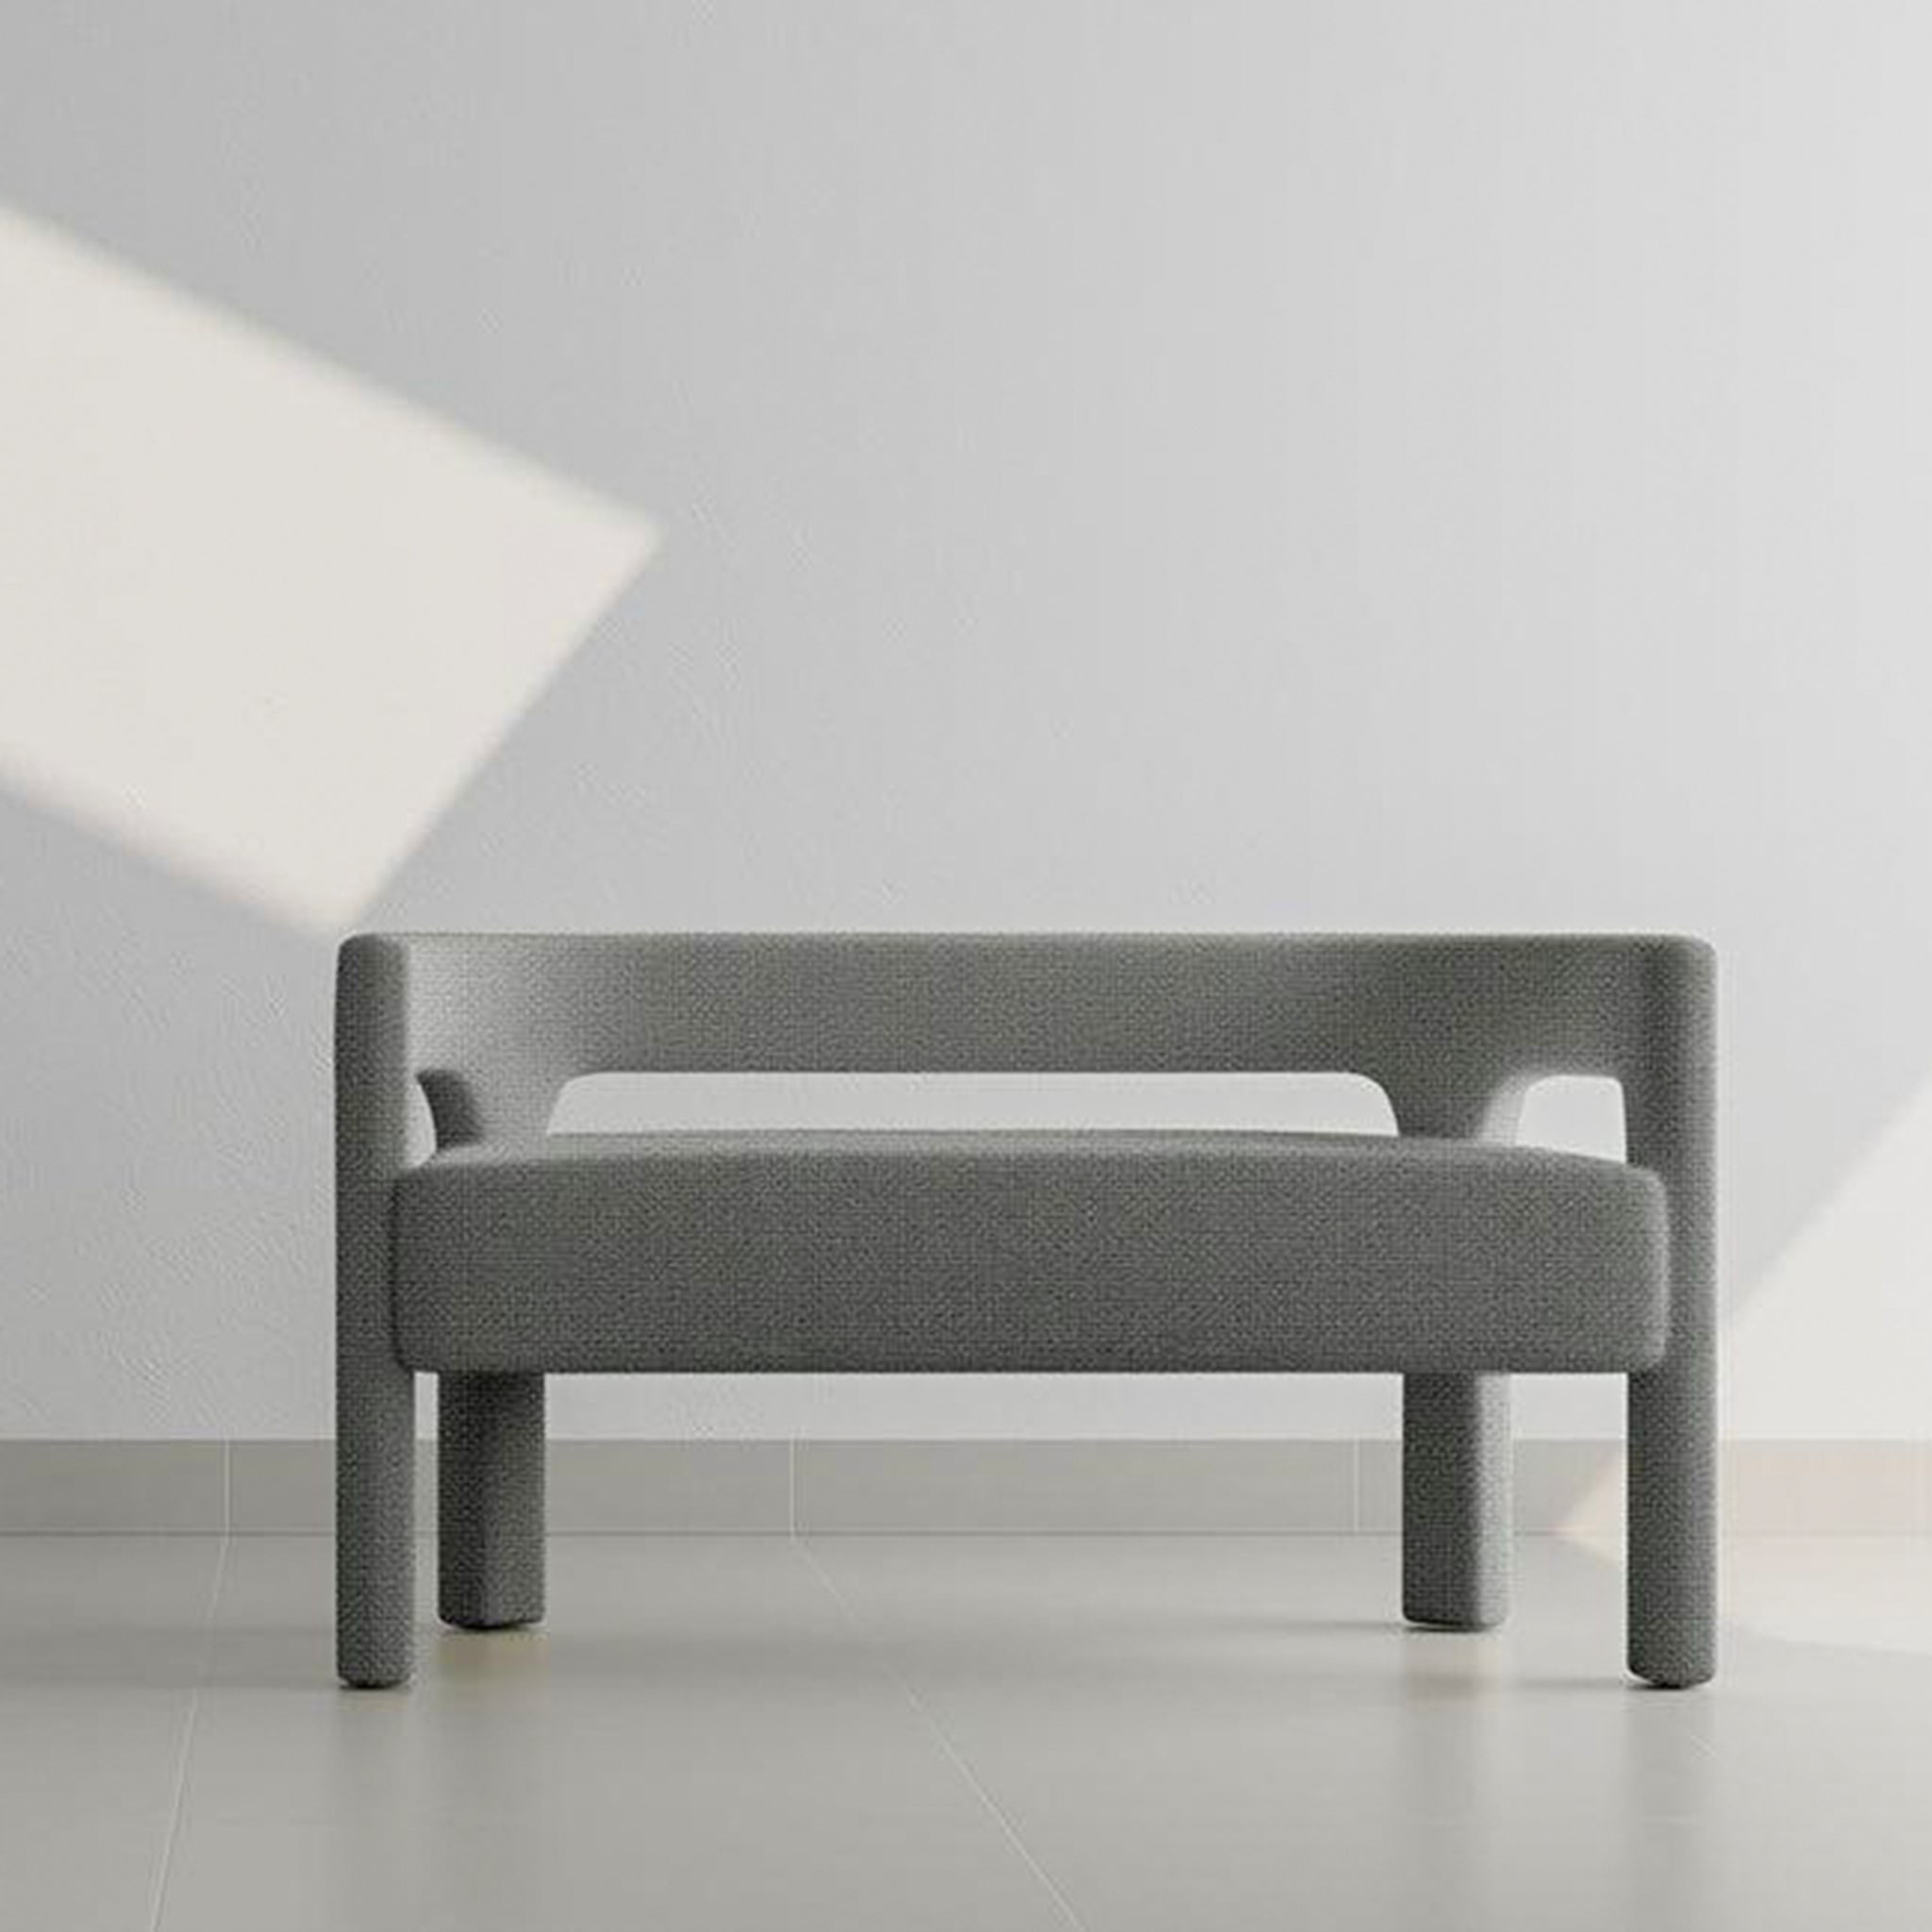 Minimalist furniture: beige sofa in a sunlit room